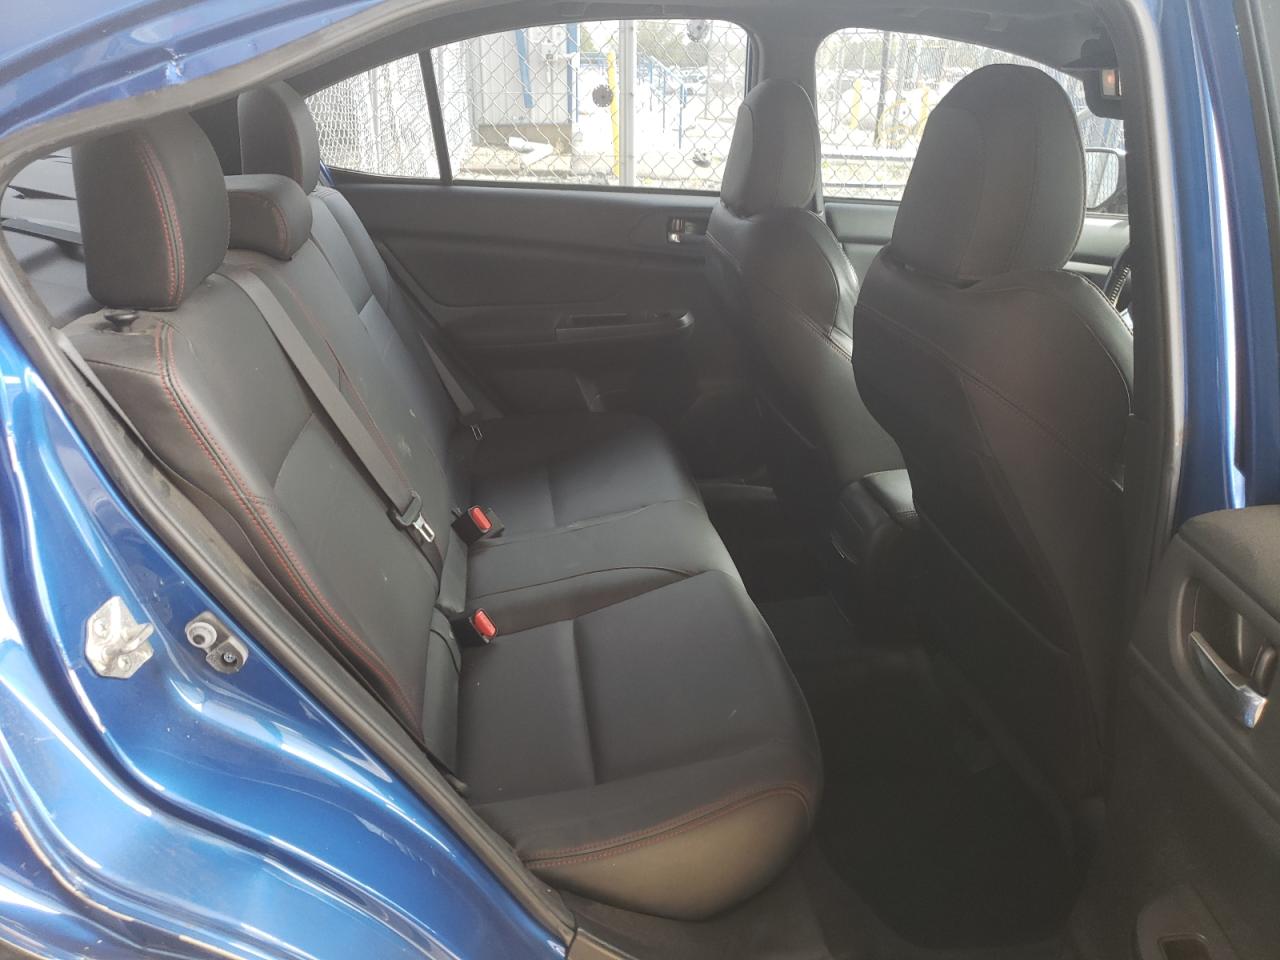 Subaru Wrx limite 2015